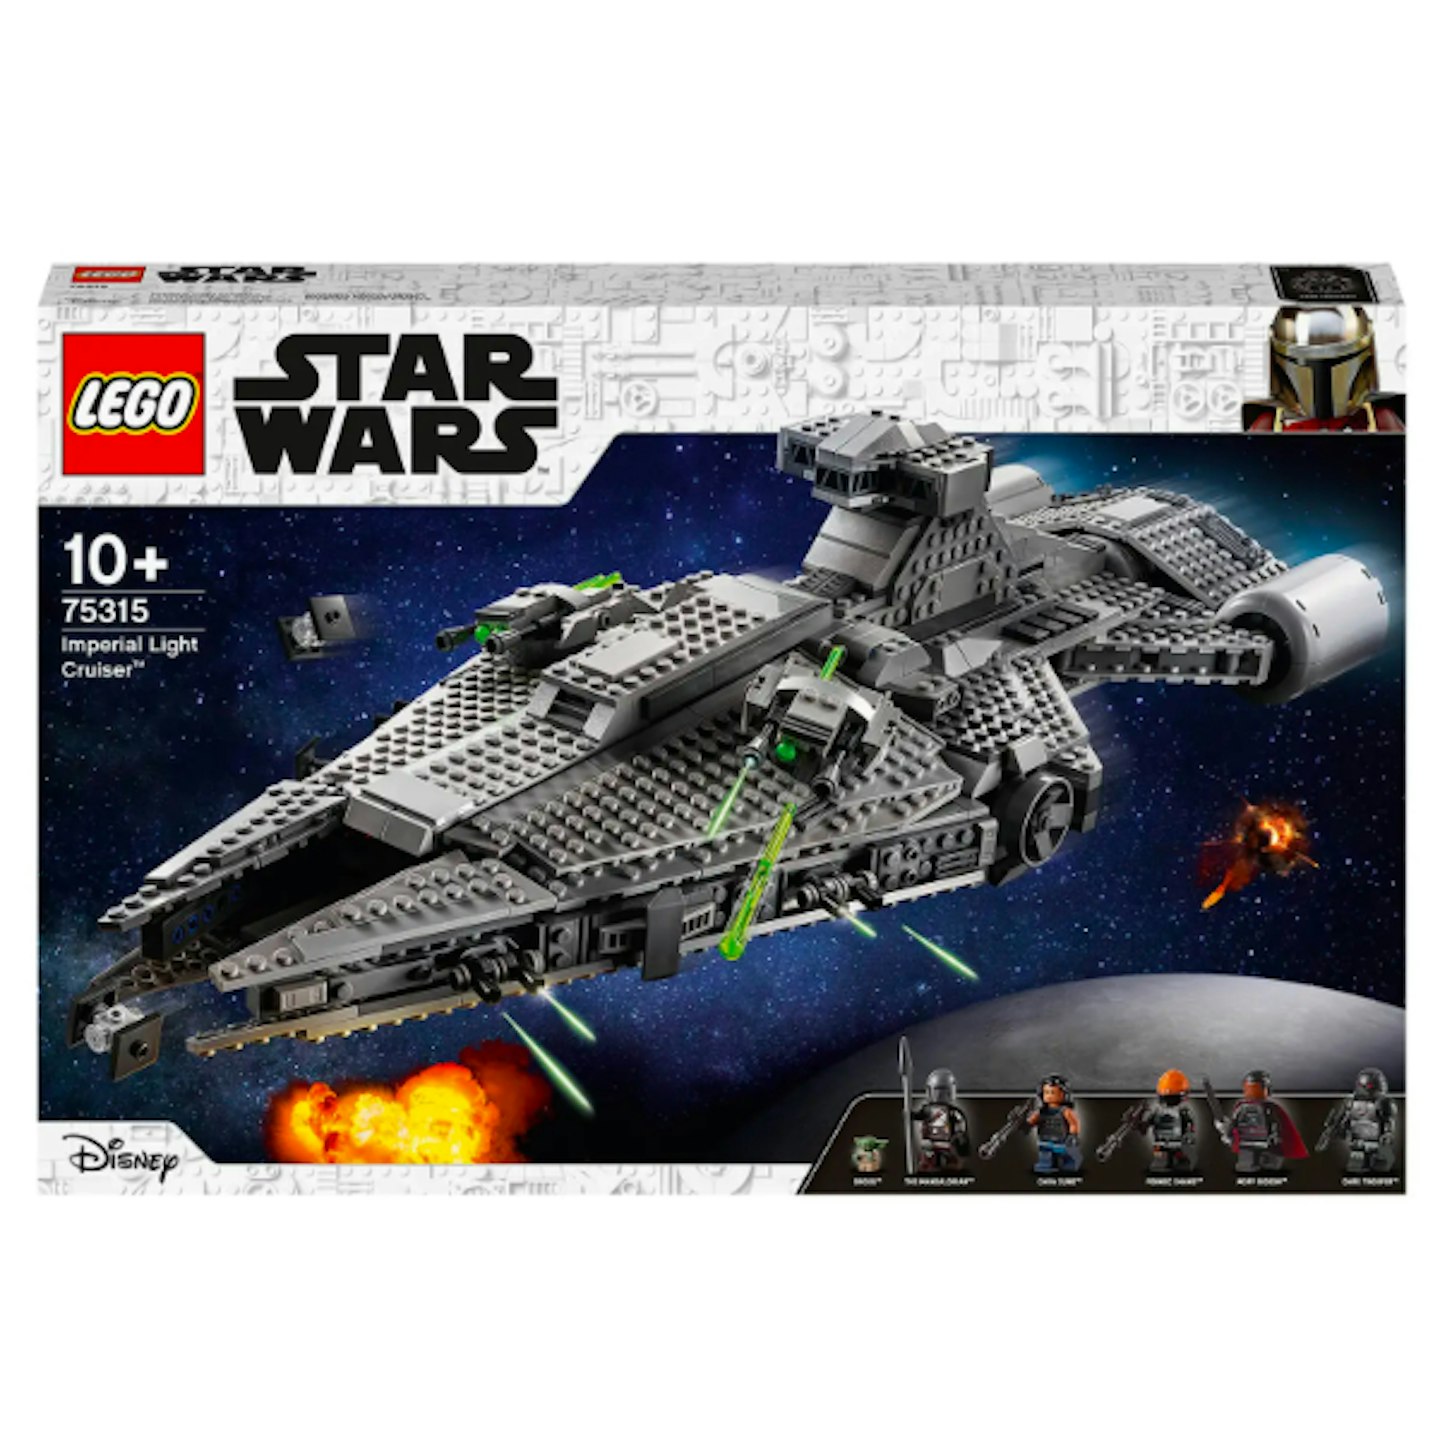 LEGO Star Wars Imperial Light Cruiser Set